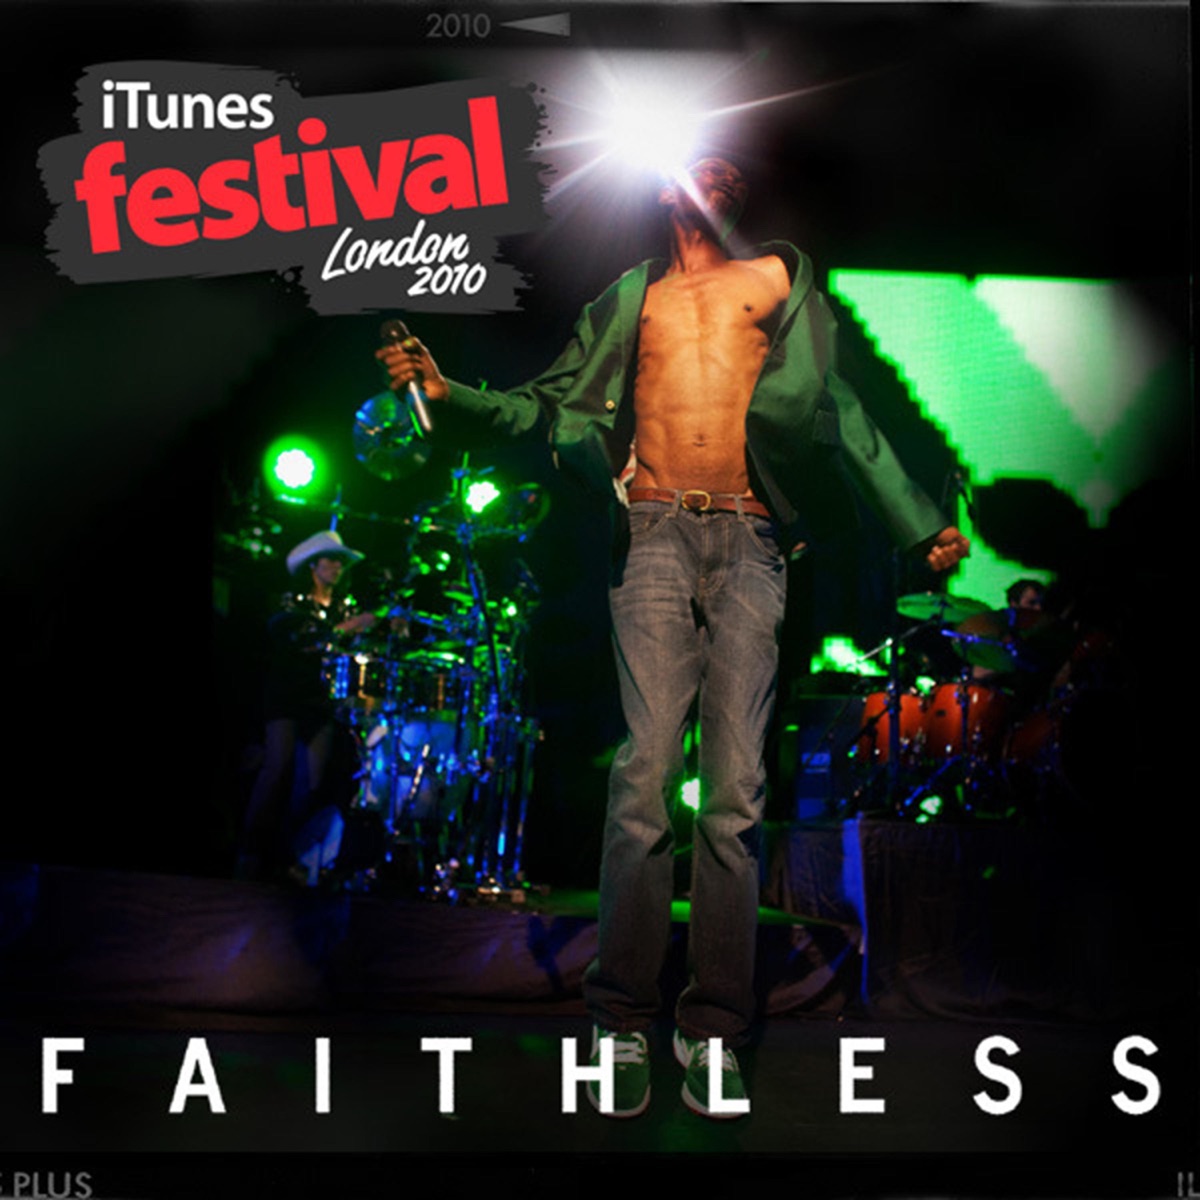 Forever Faithless - The Greatest Hits by Faithless on Apple Music